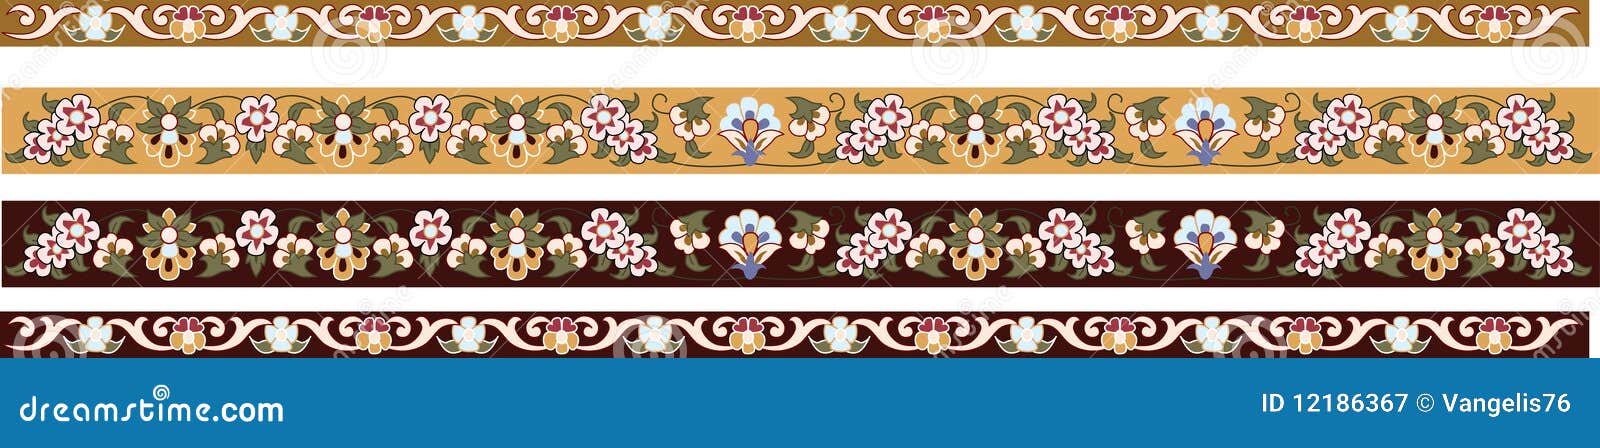 decorative floral borders